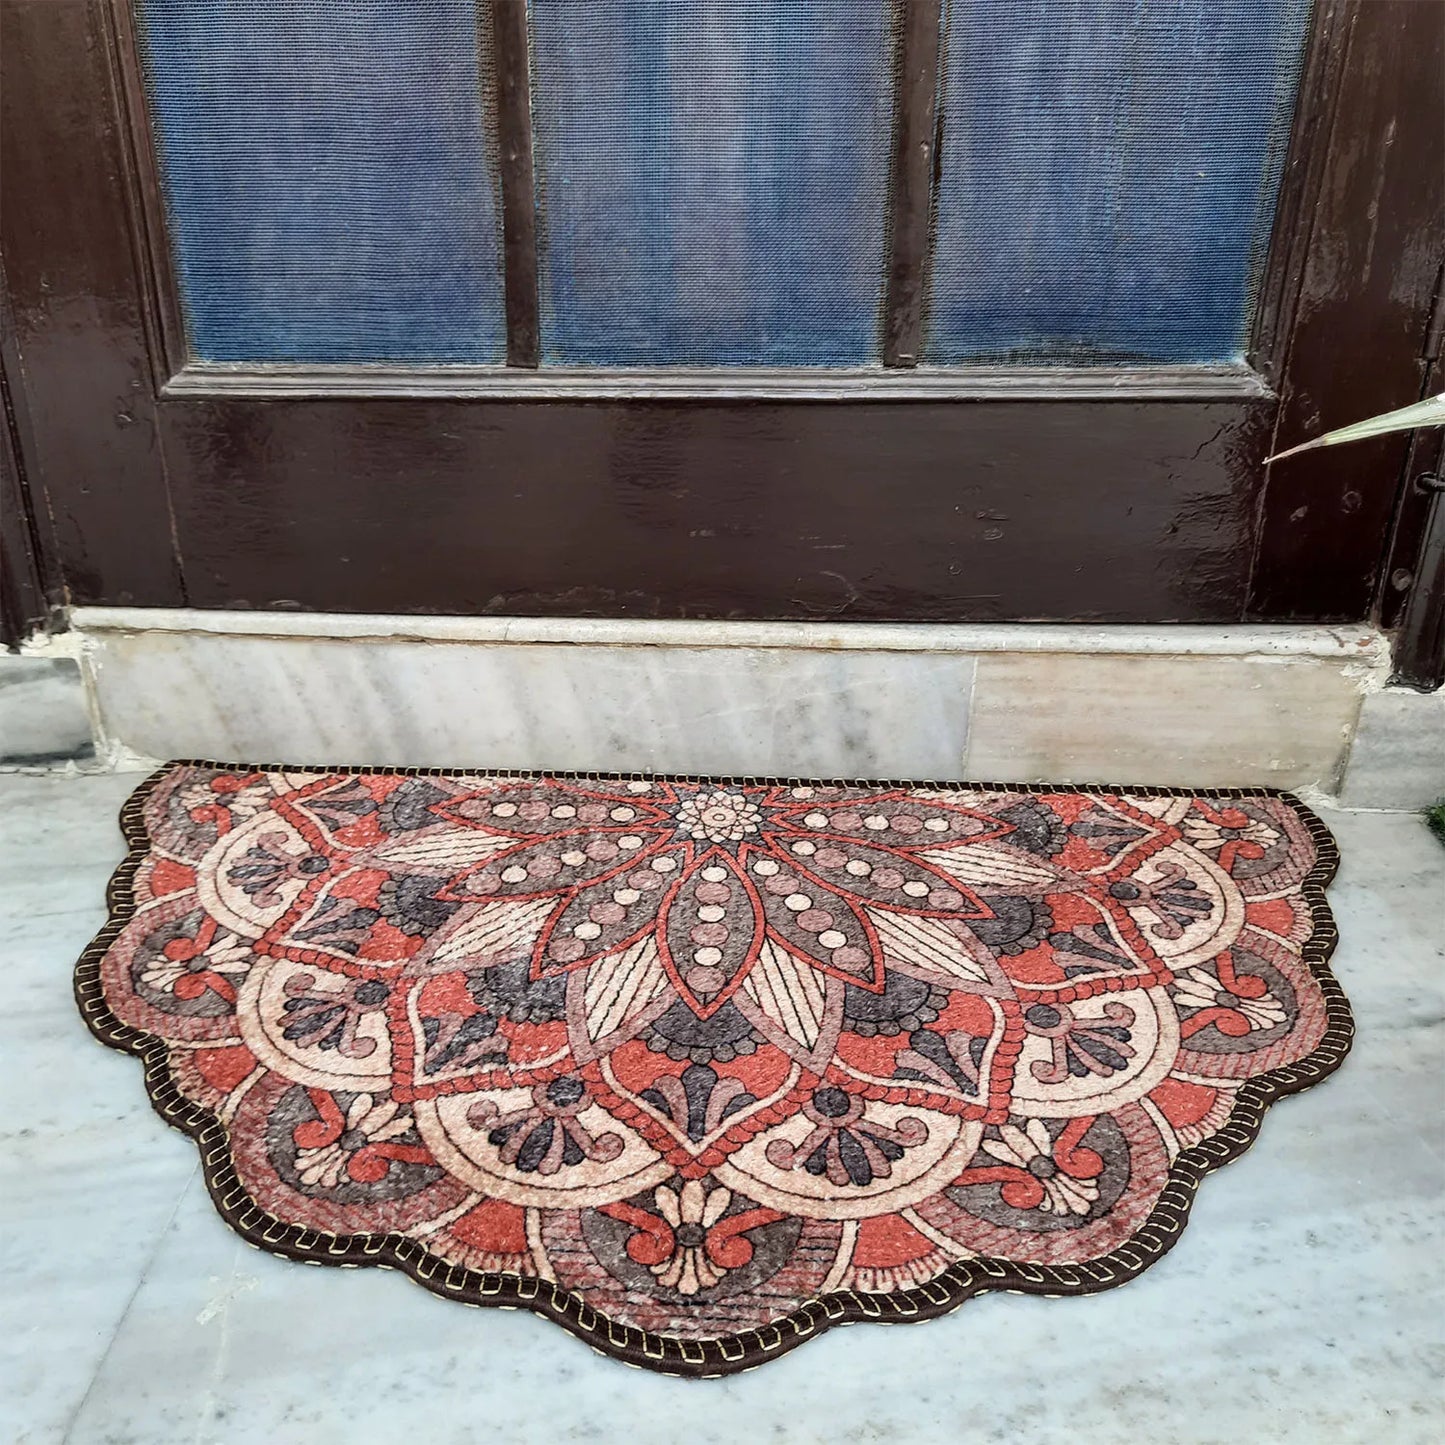 Avioni Home Floor Mats in Beautiful Rangoli Brown Design – Anti Slip, Durable & Washable | Outdoor & Indoor